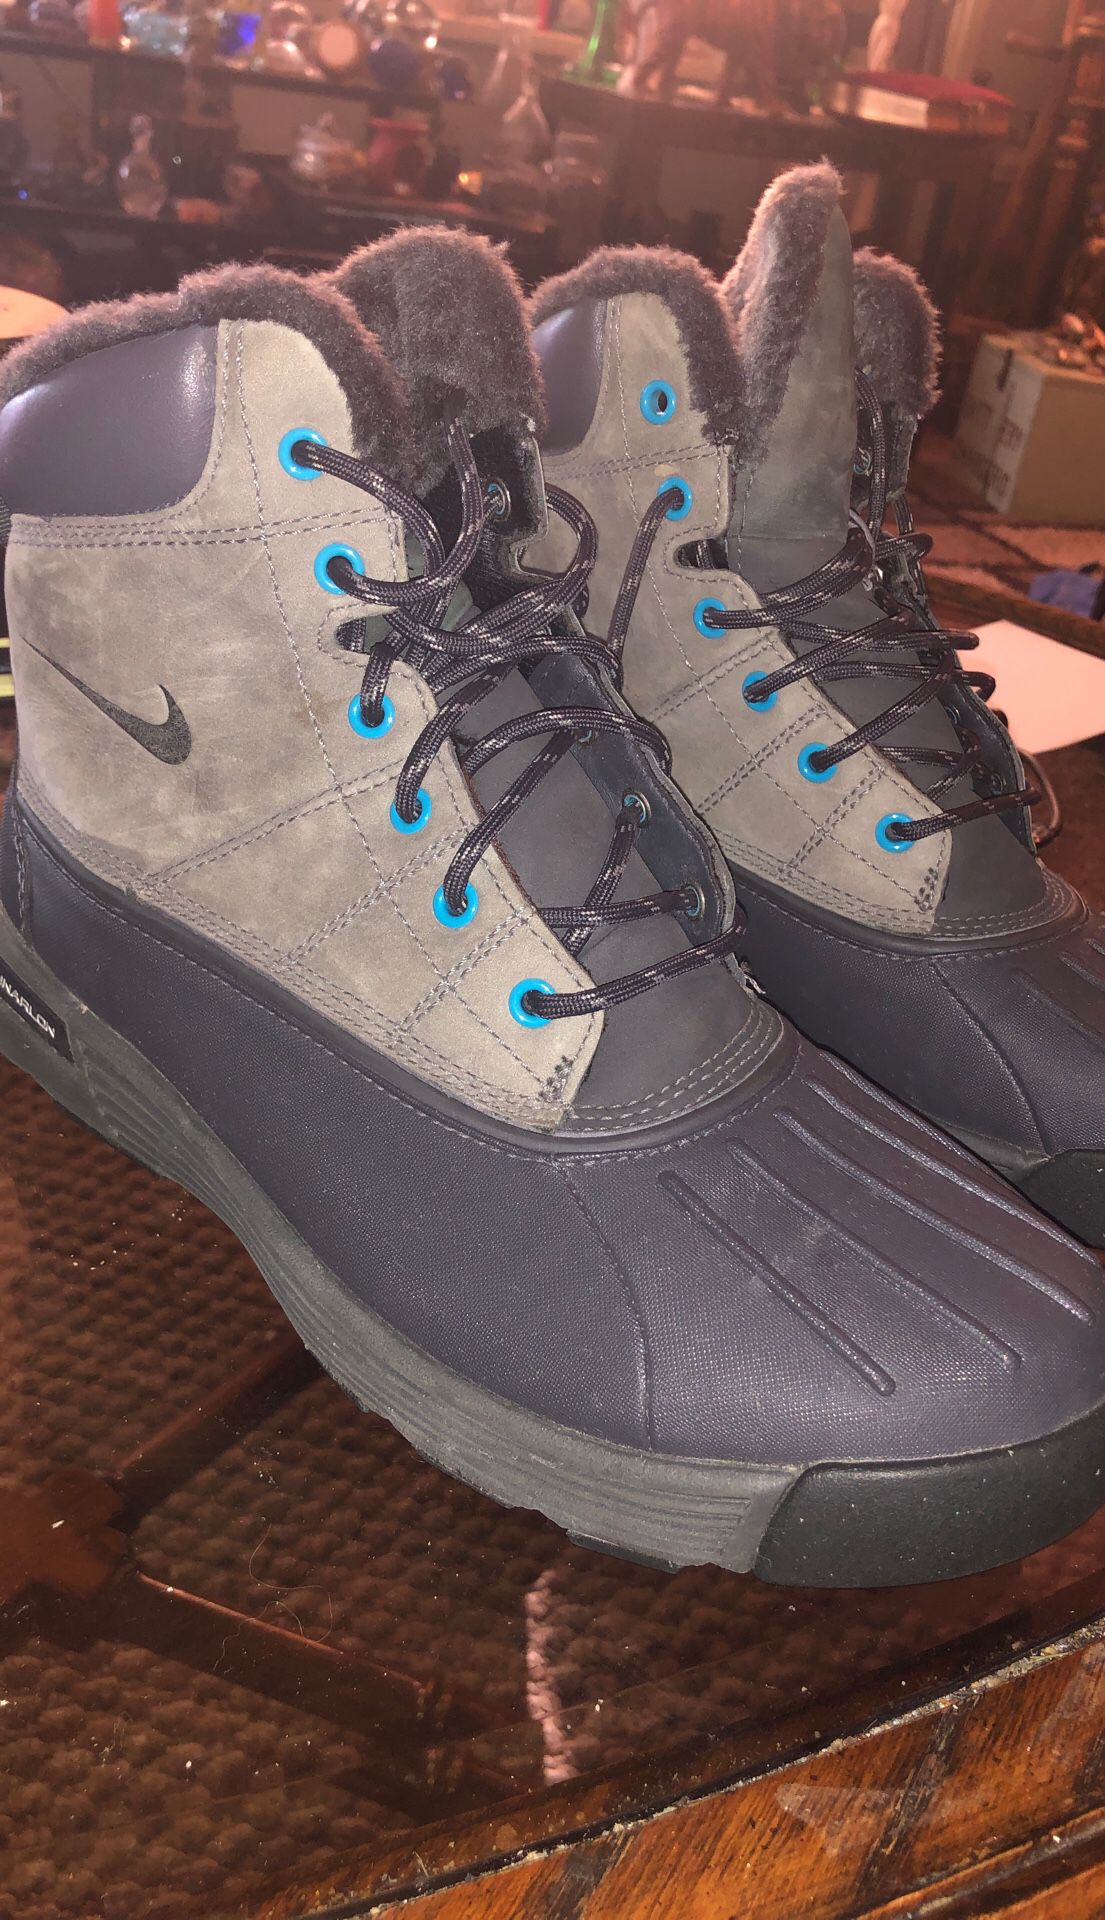 Women’s Nike lunarlon boots size 9 grey black blue